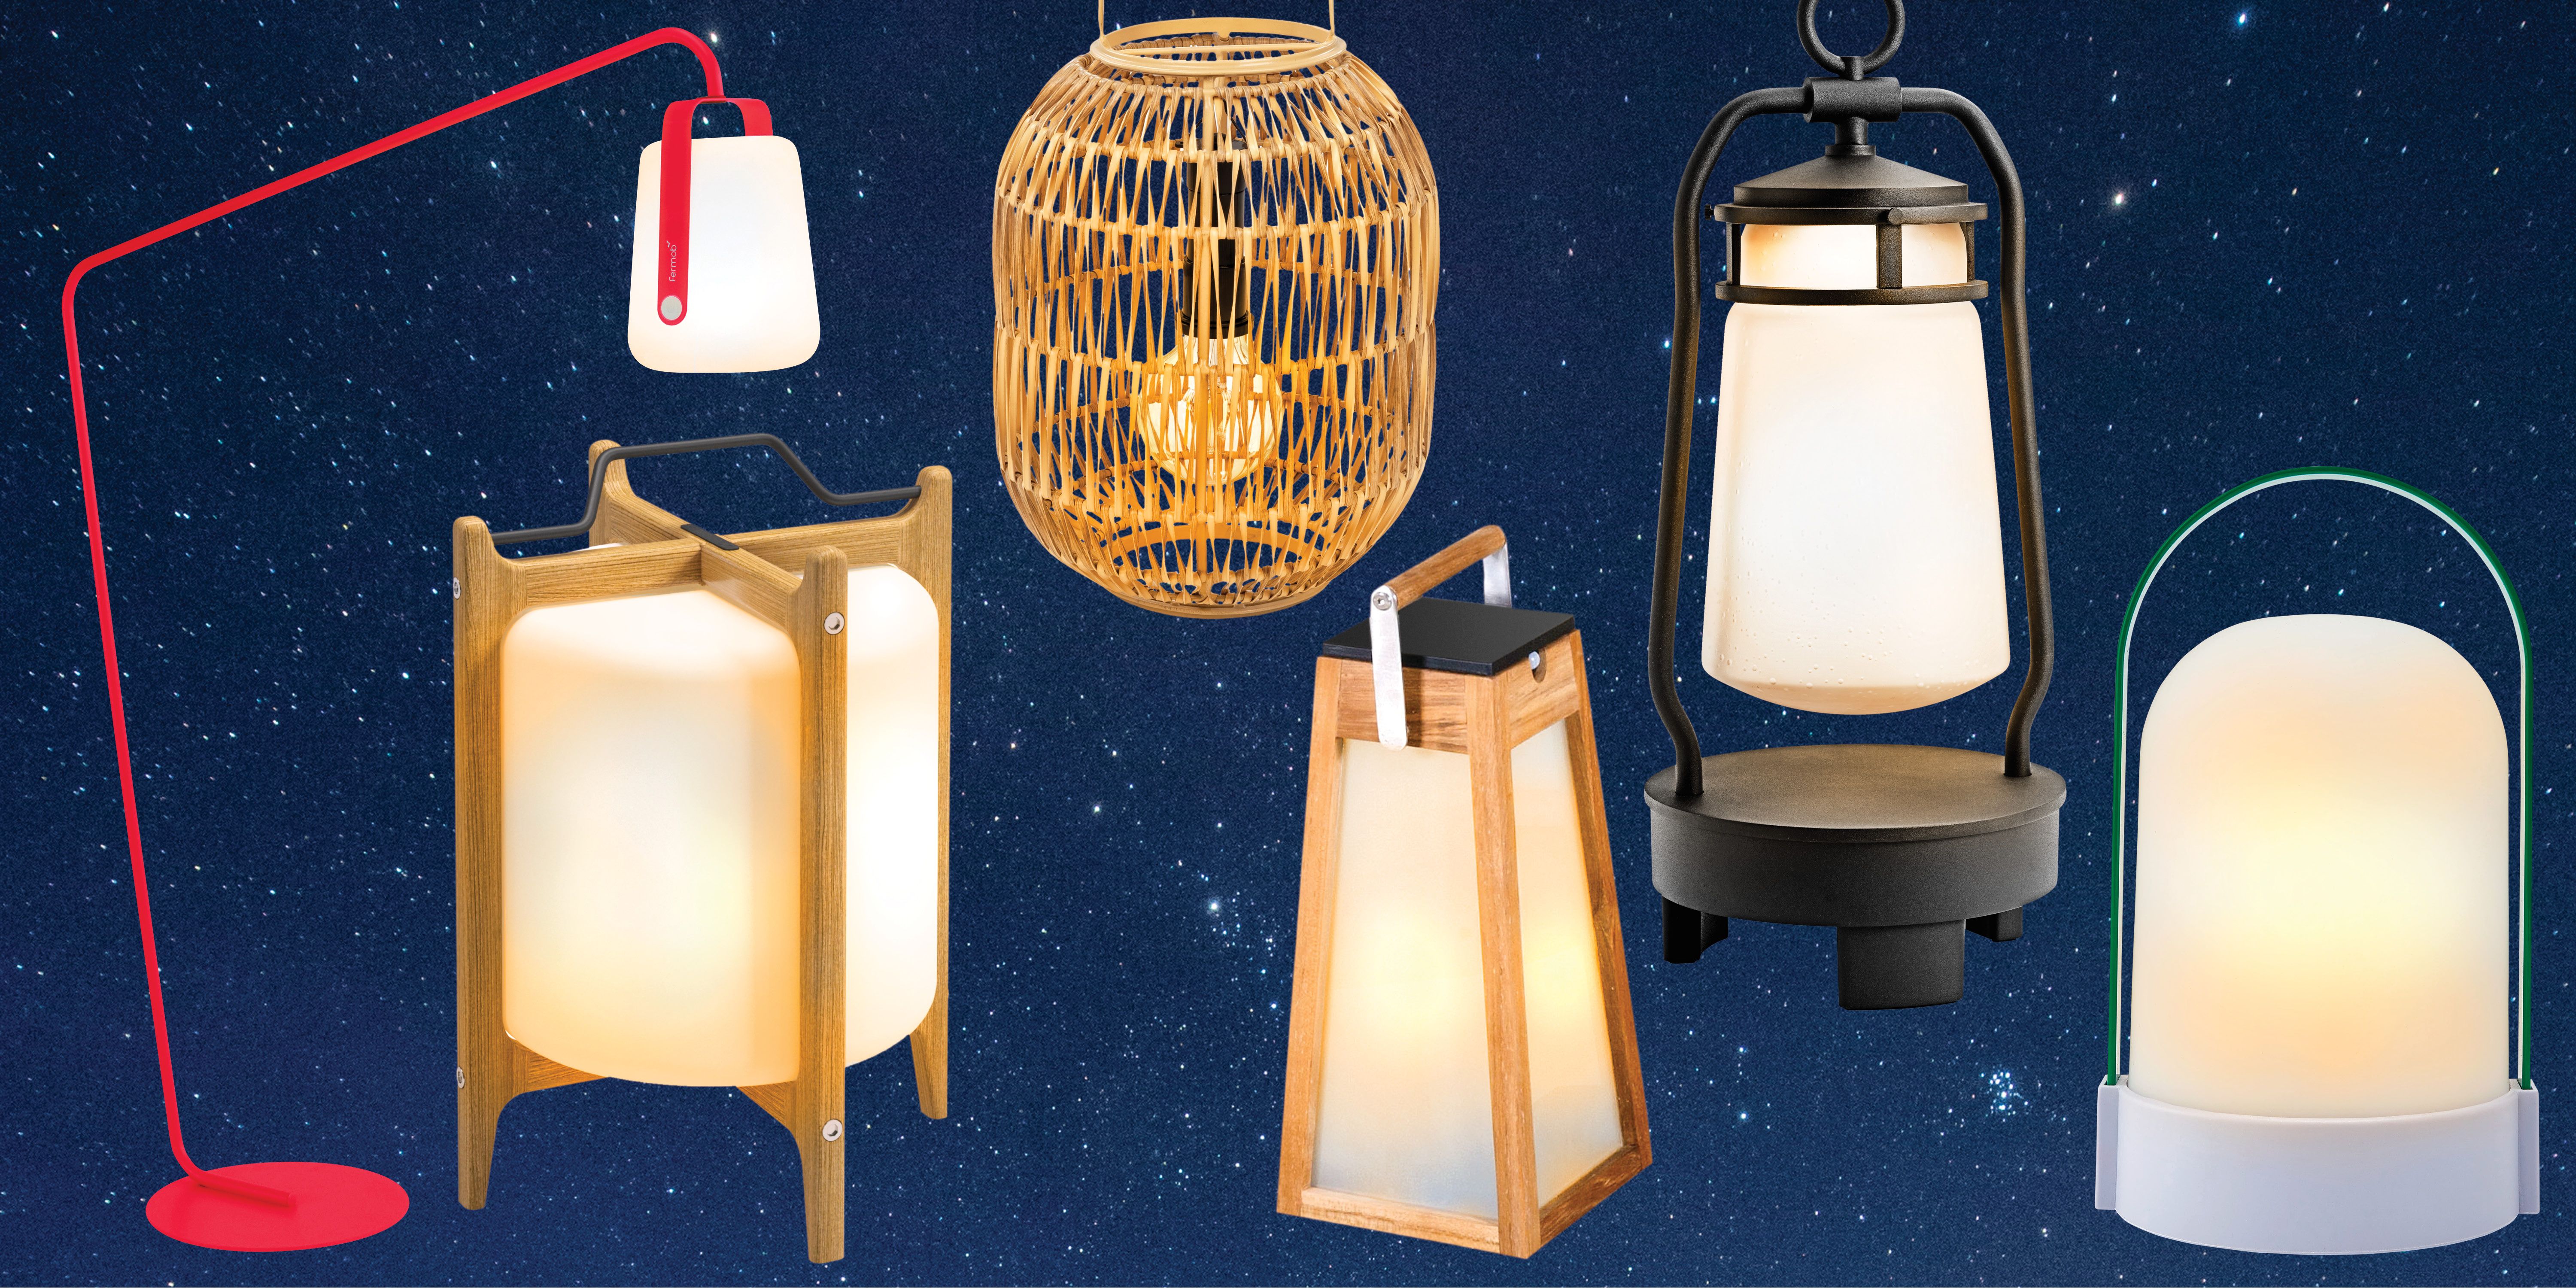 10 Best Outdoor Lanterns for Your Backyard - Stylish Solar and LED Lanterns